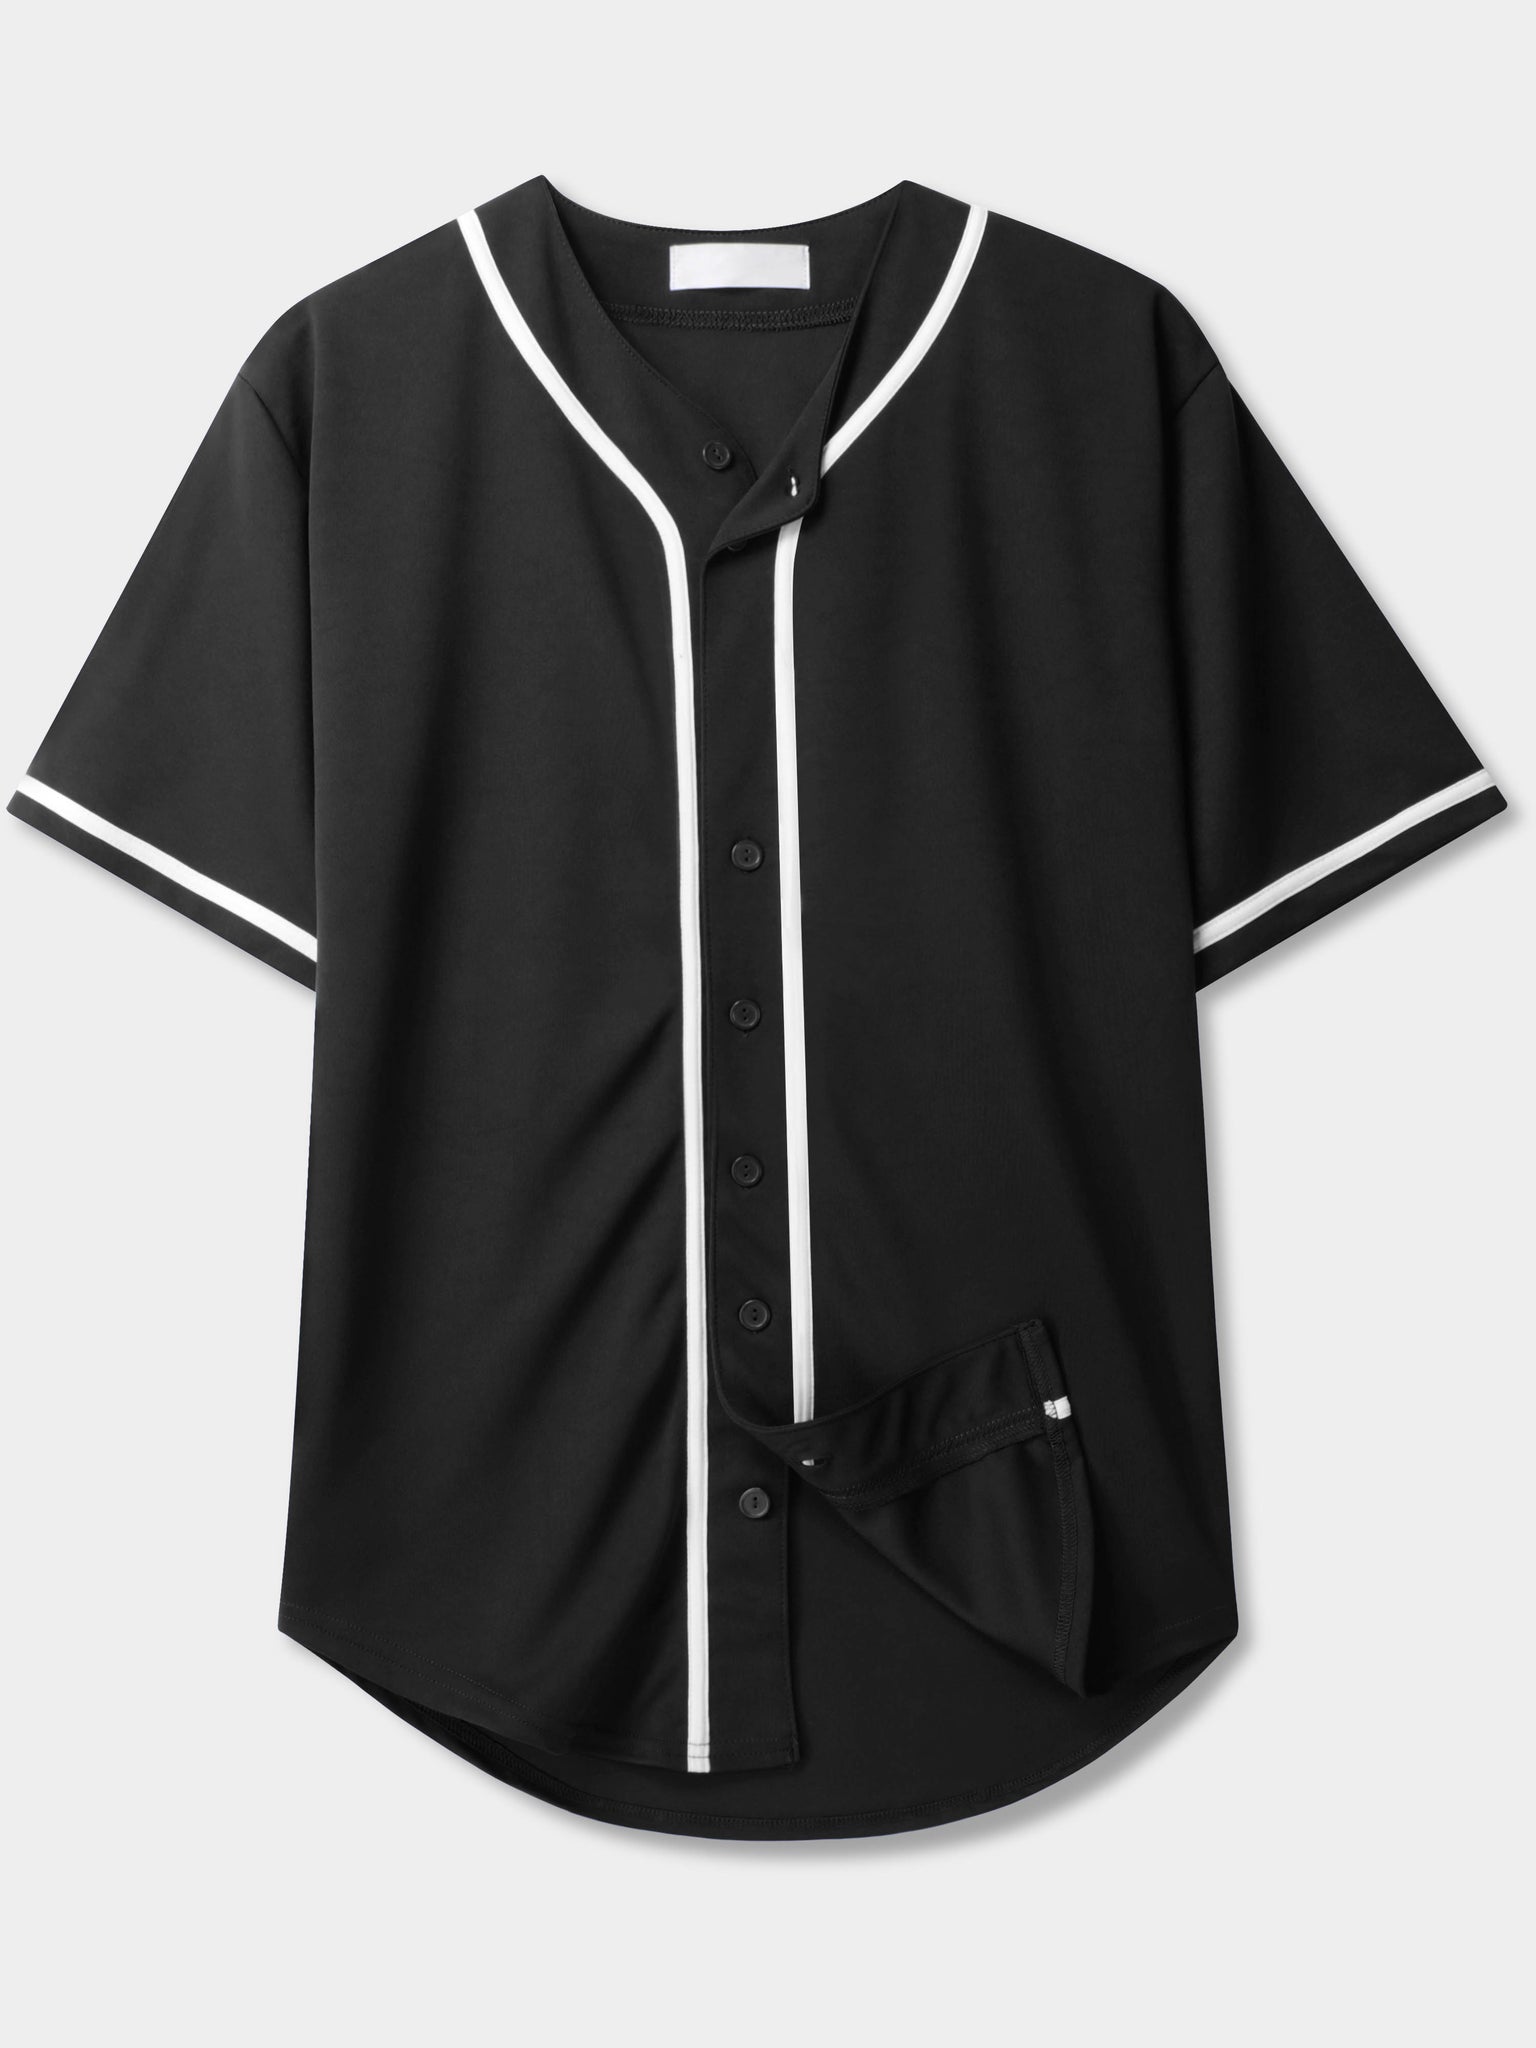 Mens Team Sports Printable Blank Baseball Jersey Collar Button Up Shirts - Men > T-shirts & Tank Tops > Baseball Jersey | Hat and Beyond 2X-Large /